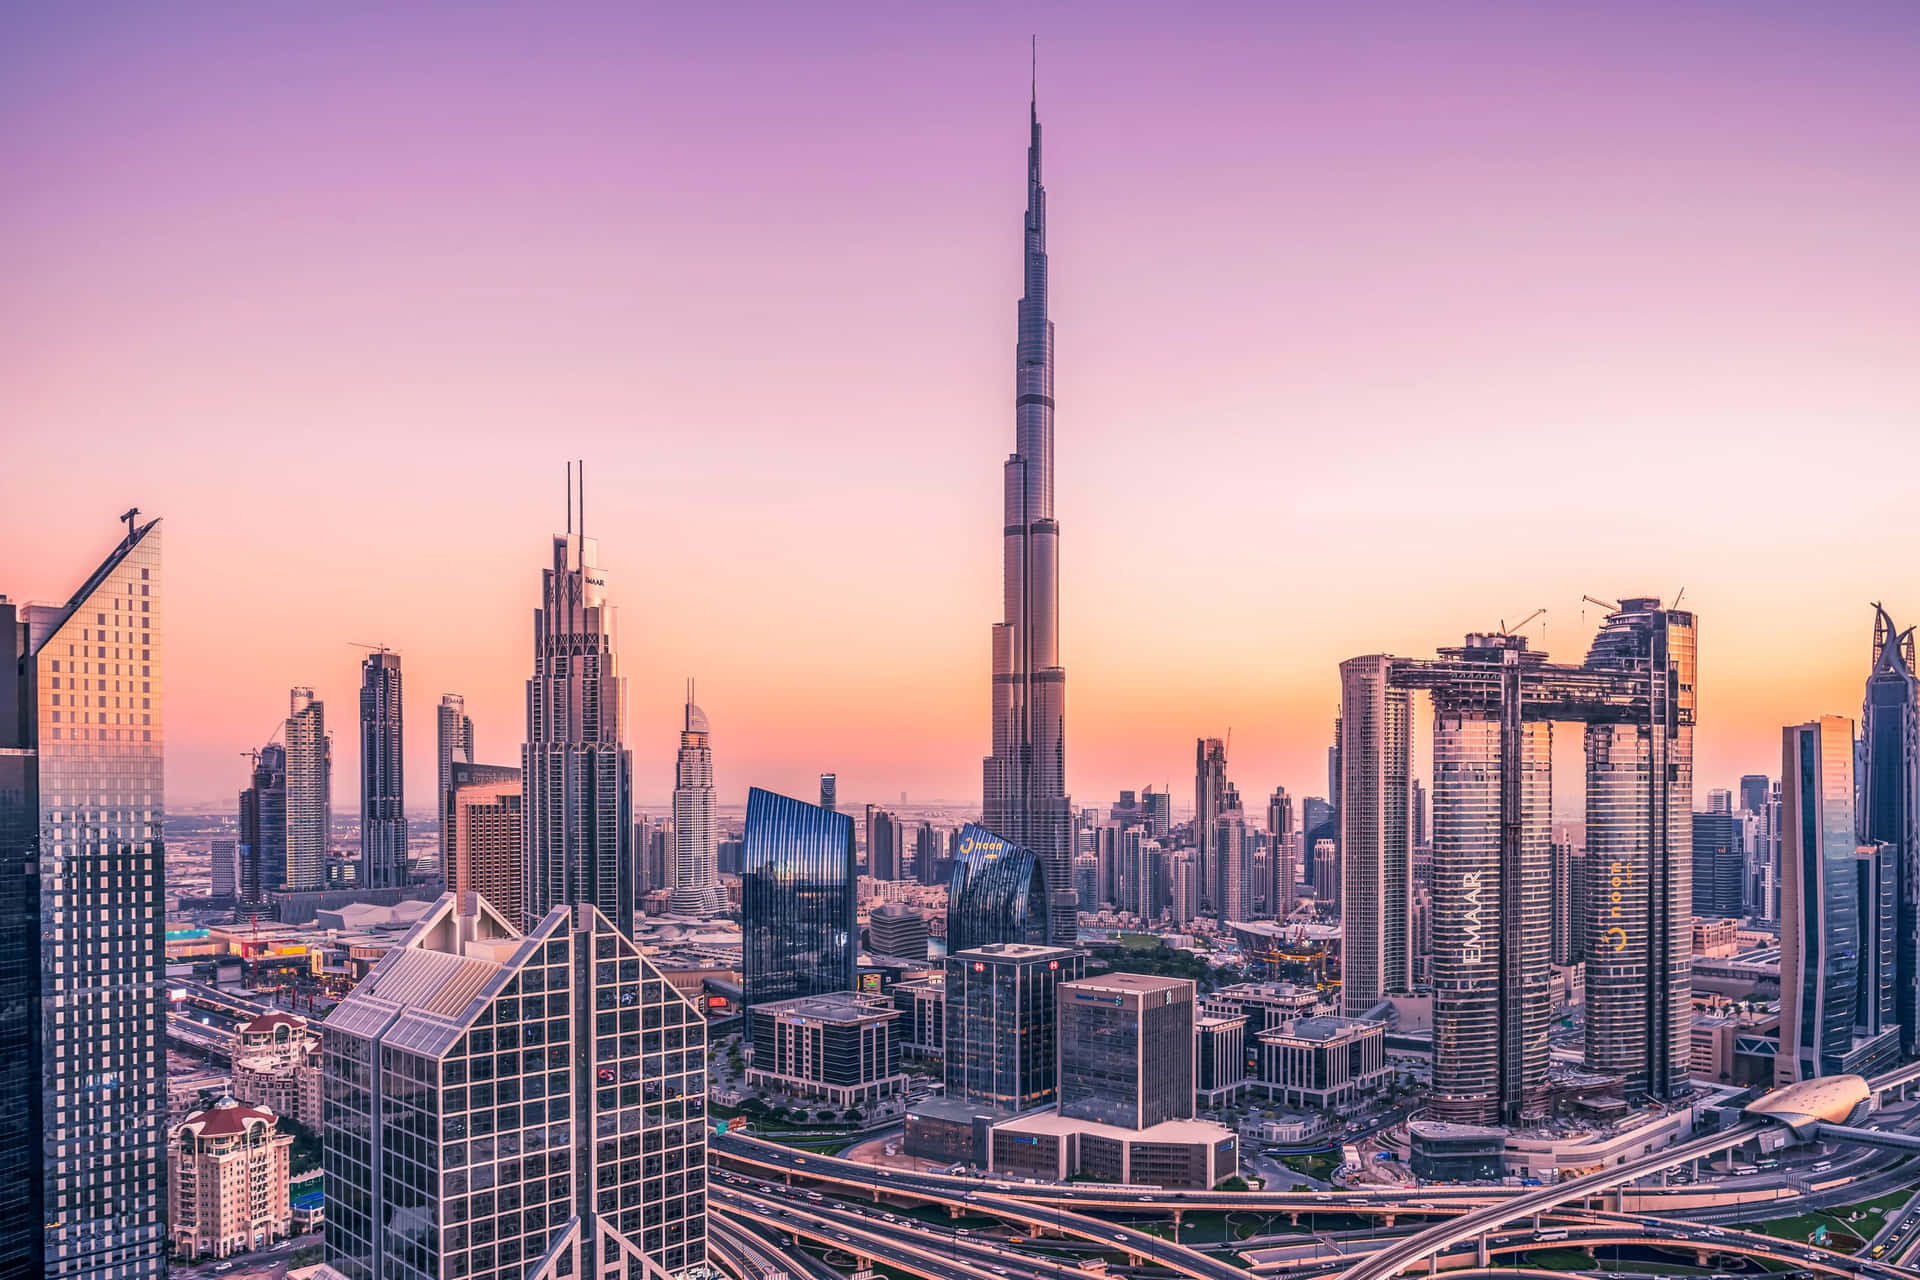 A mesmerizing view of the Dubai skyline.